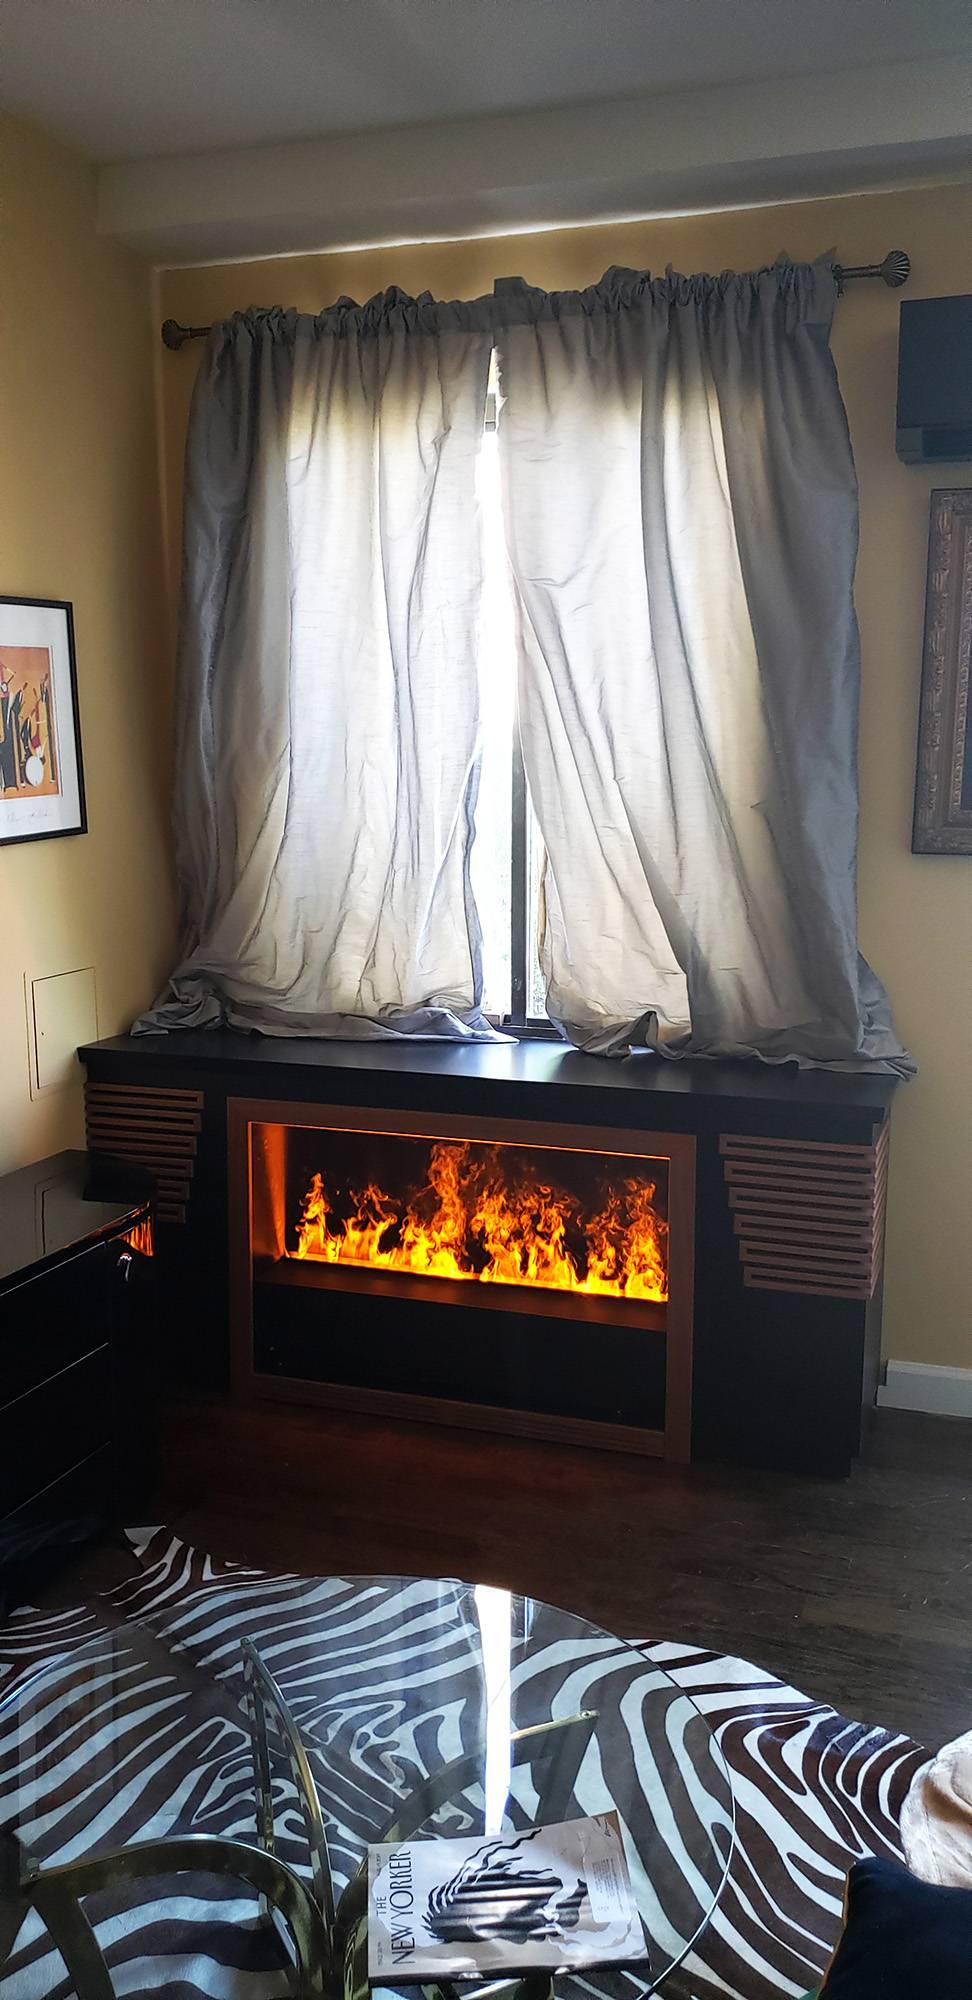 Fireplace & Radiator Enclosure